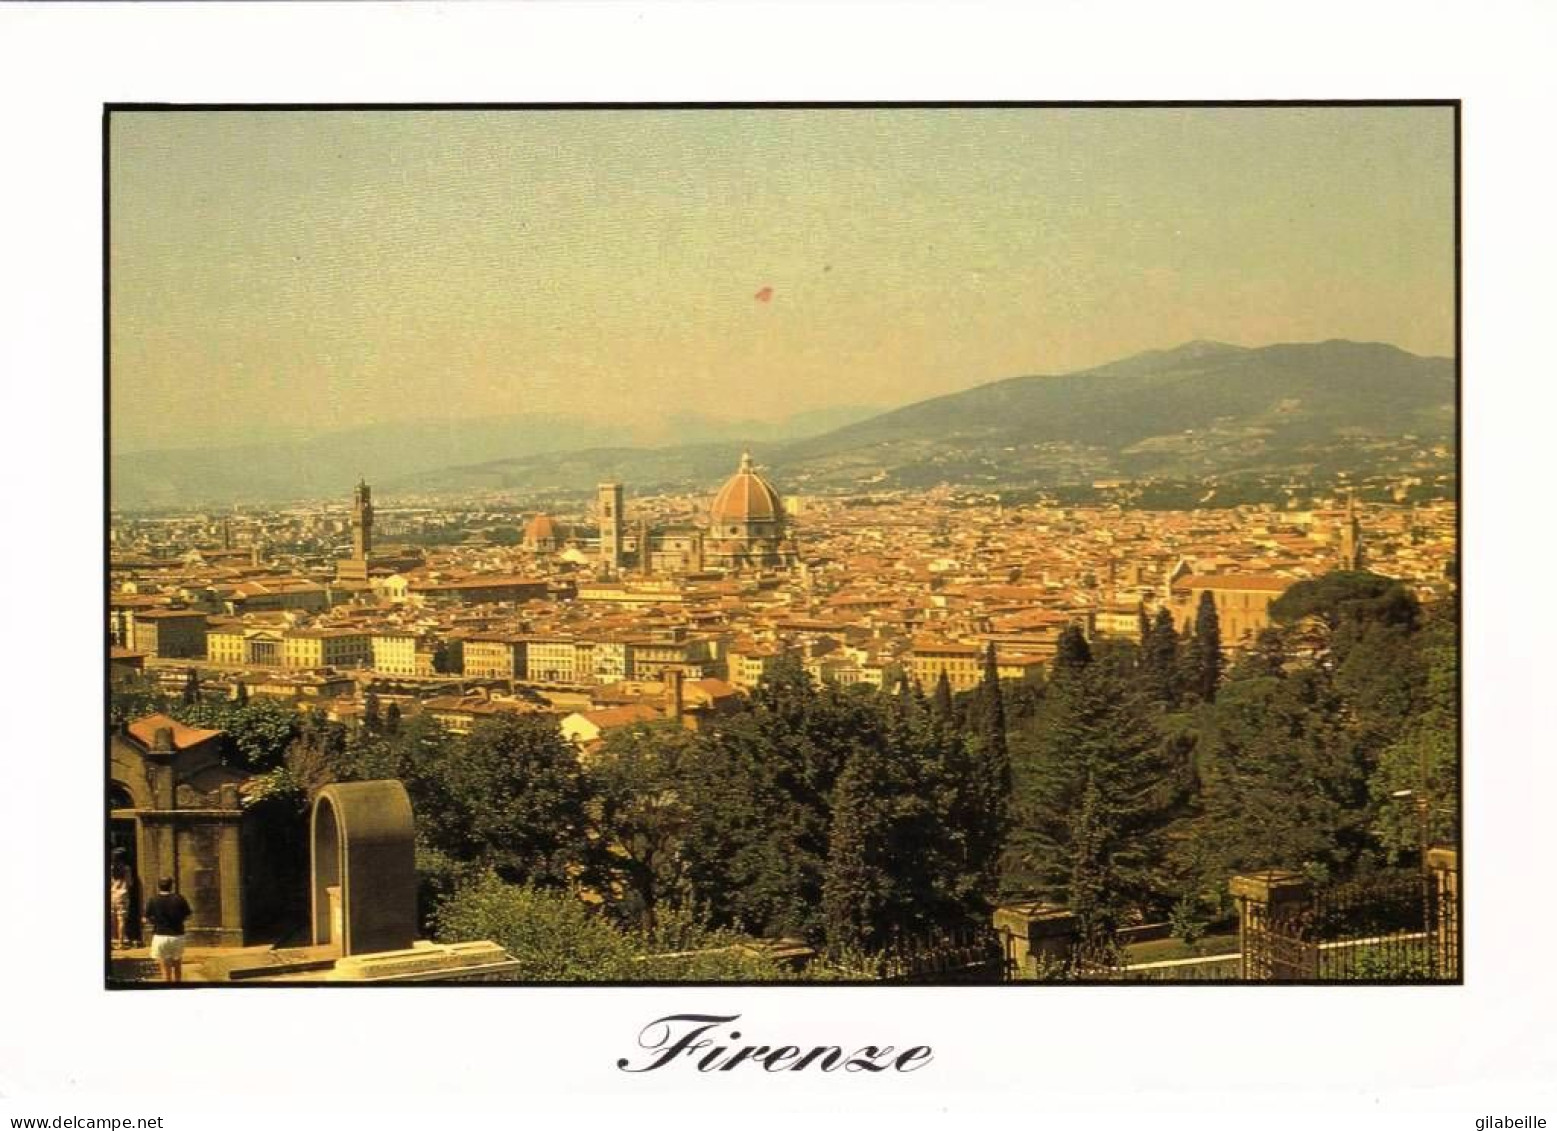 FIRENZE - FLORENCE - Panorama - Firenze (Florence)